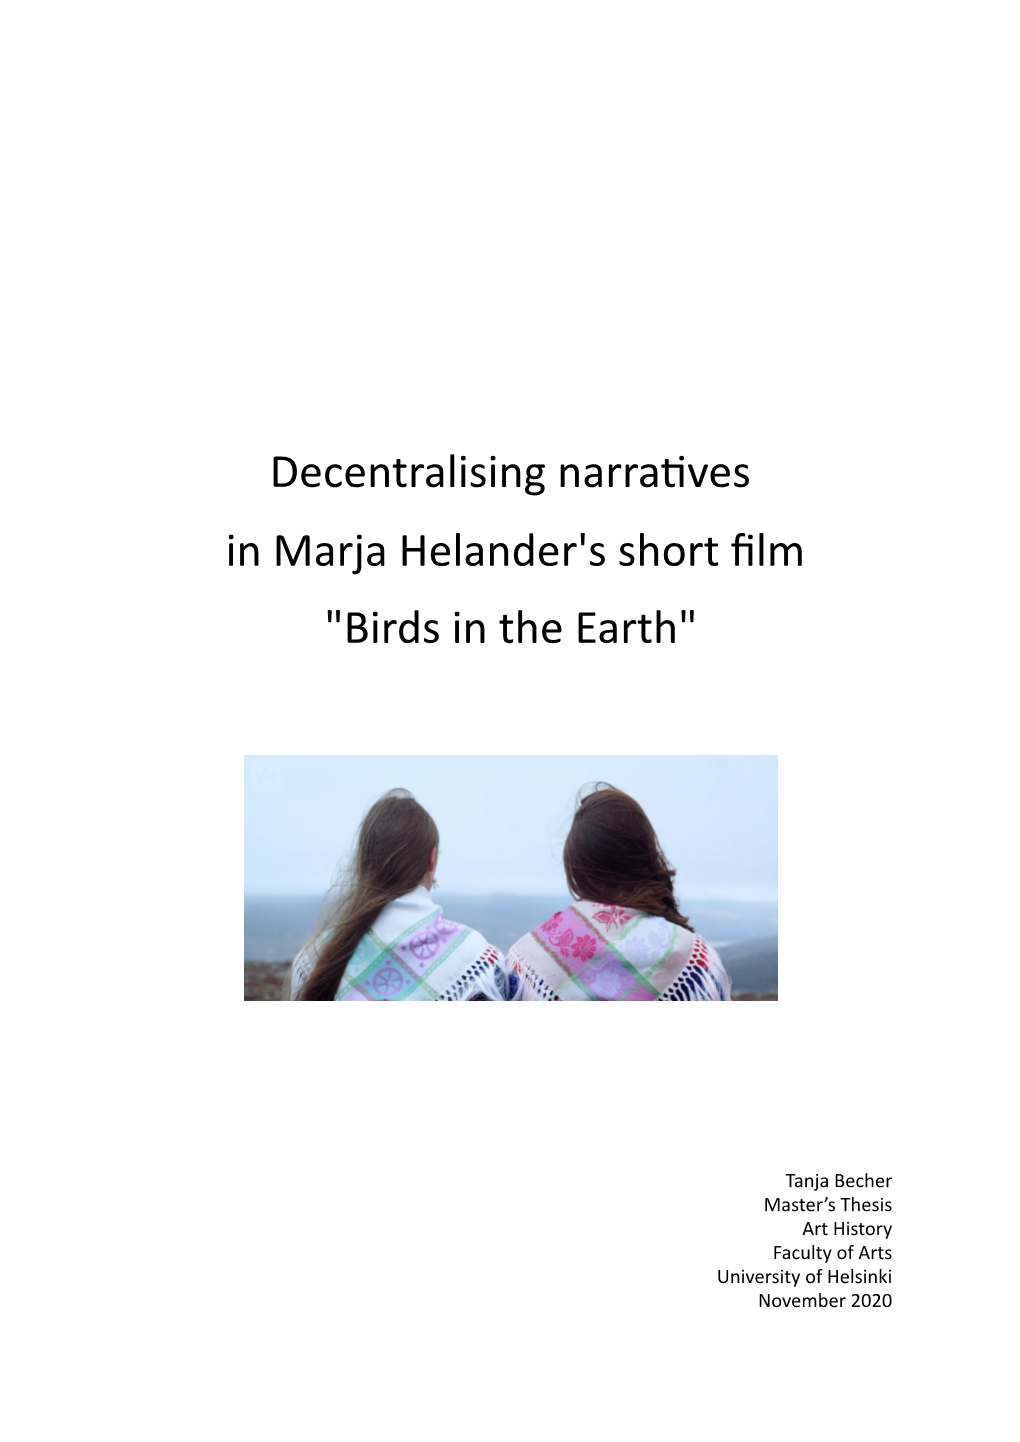 Decentralising Narra5ves in Marja Helander's Short Film "Birds in The